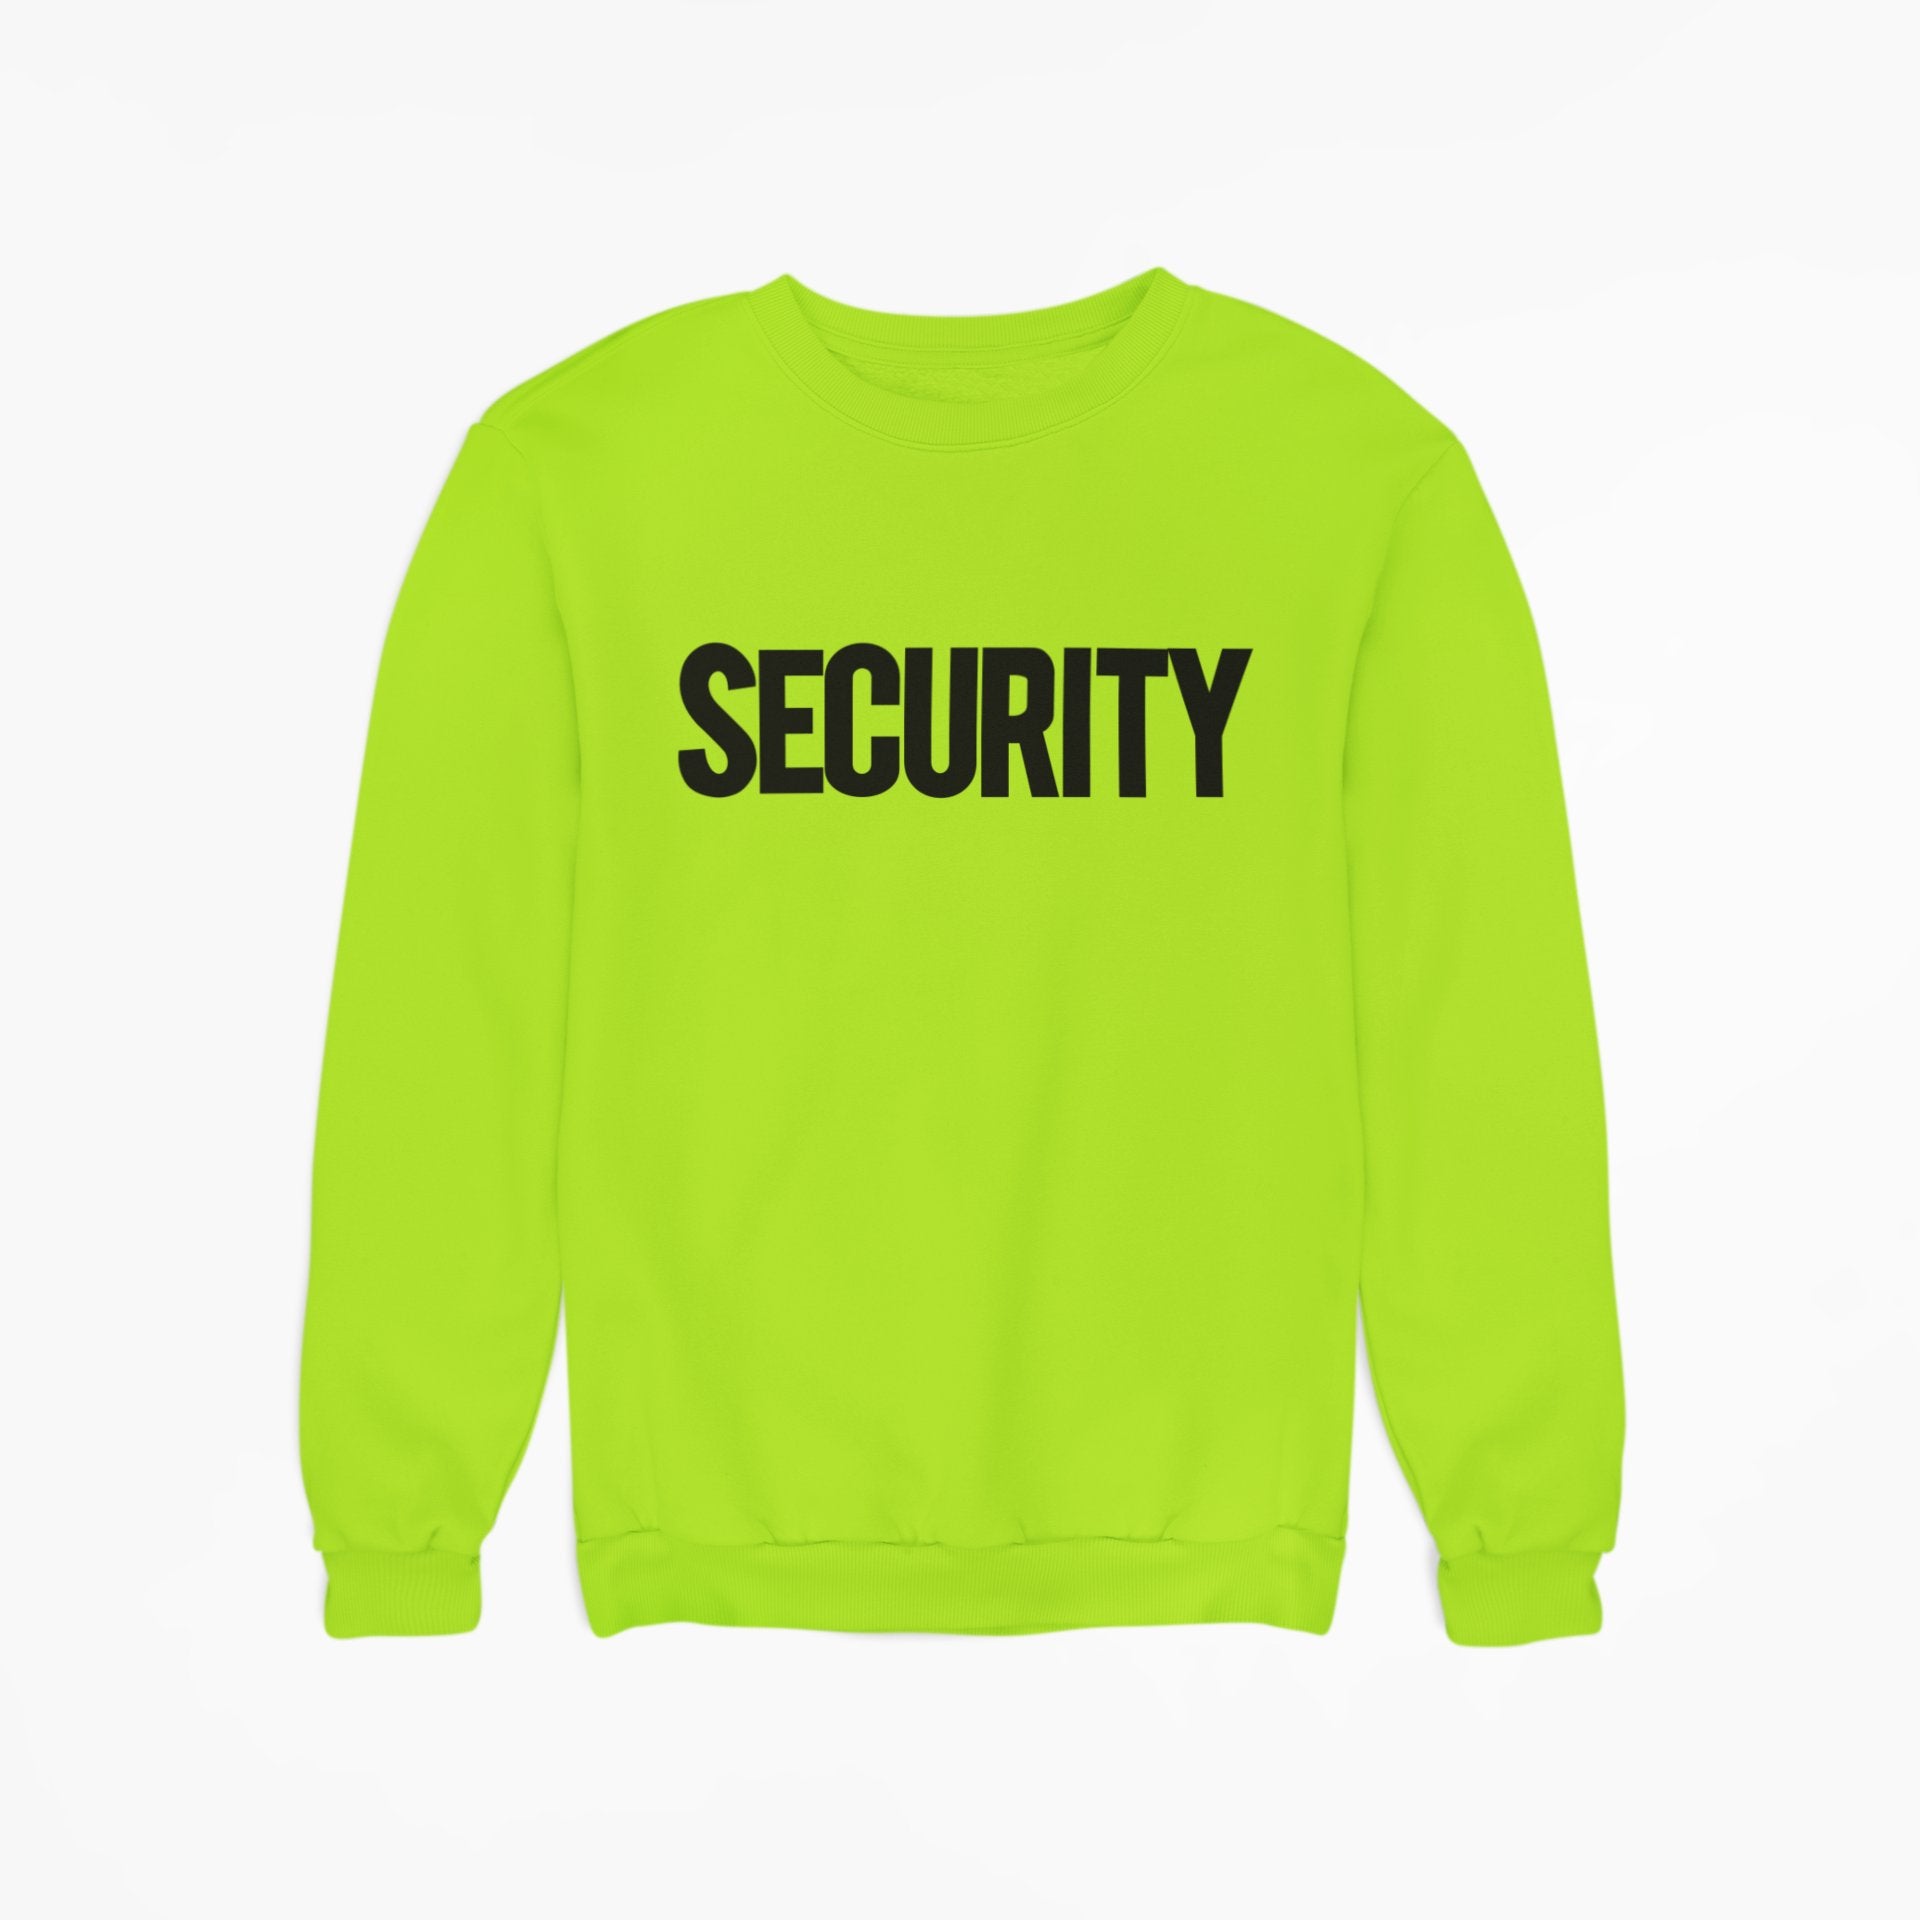 Title: Men's Security Sweatshirt Soft Fleece Crewneck (Black/White)